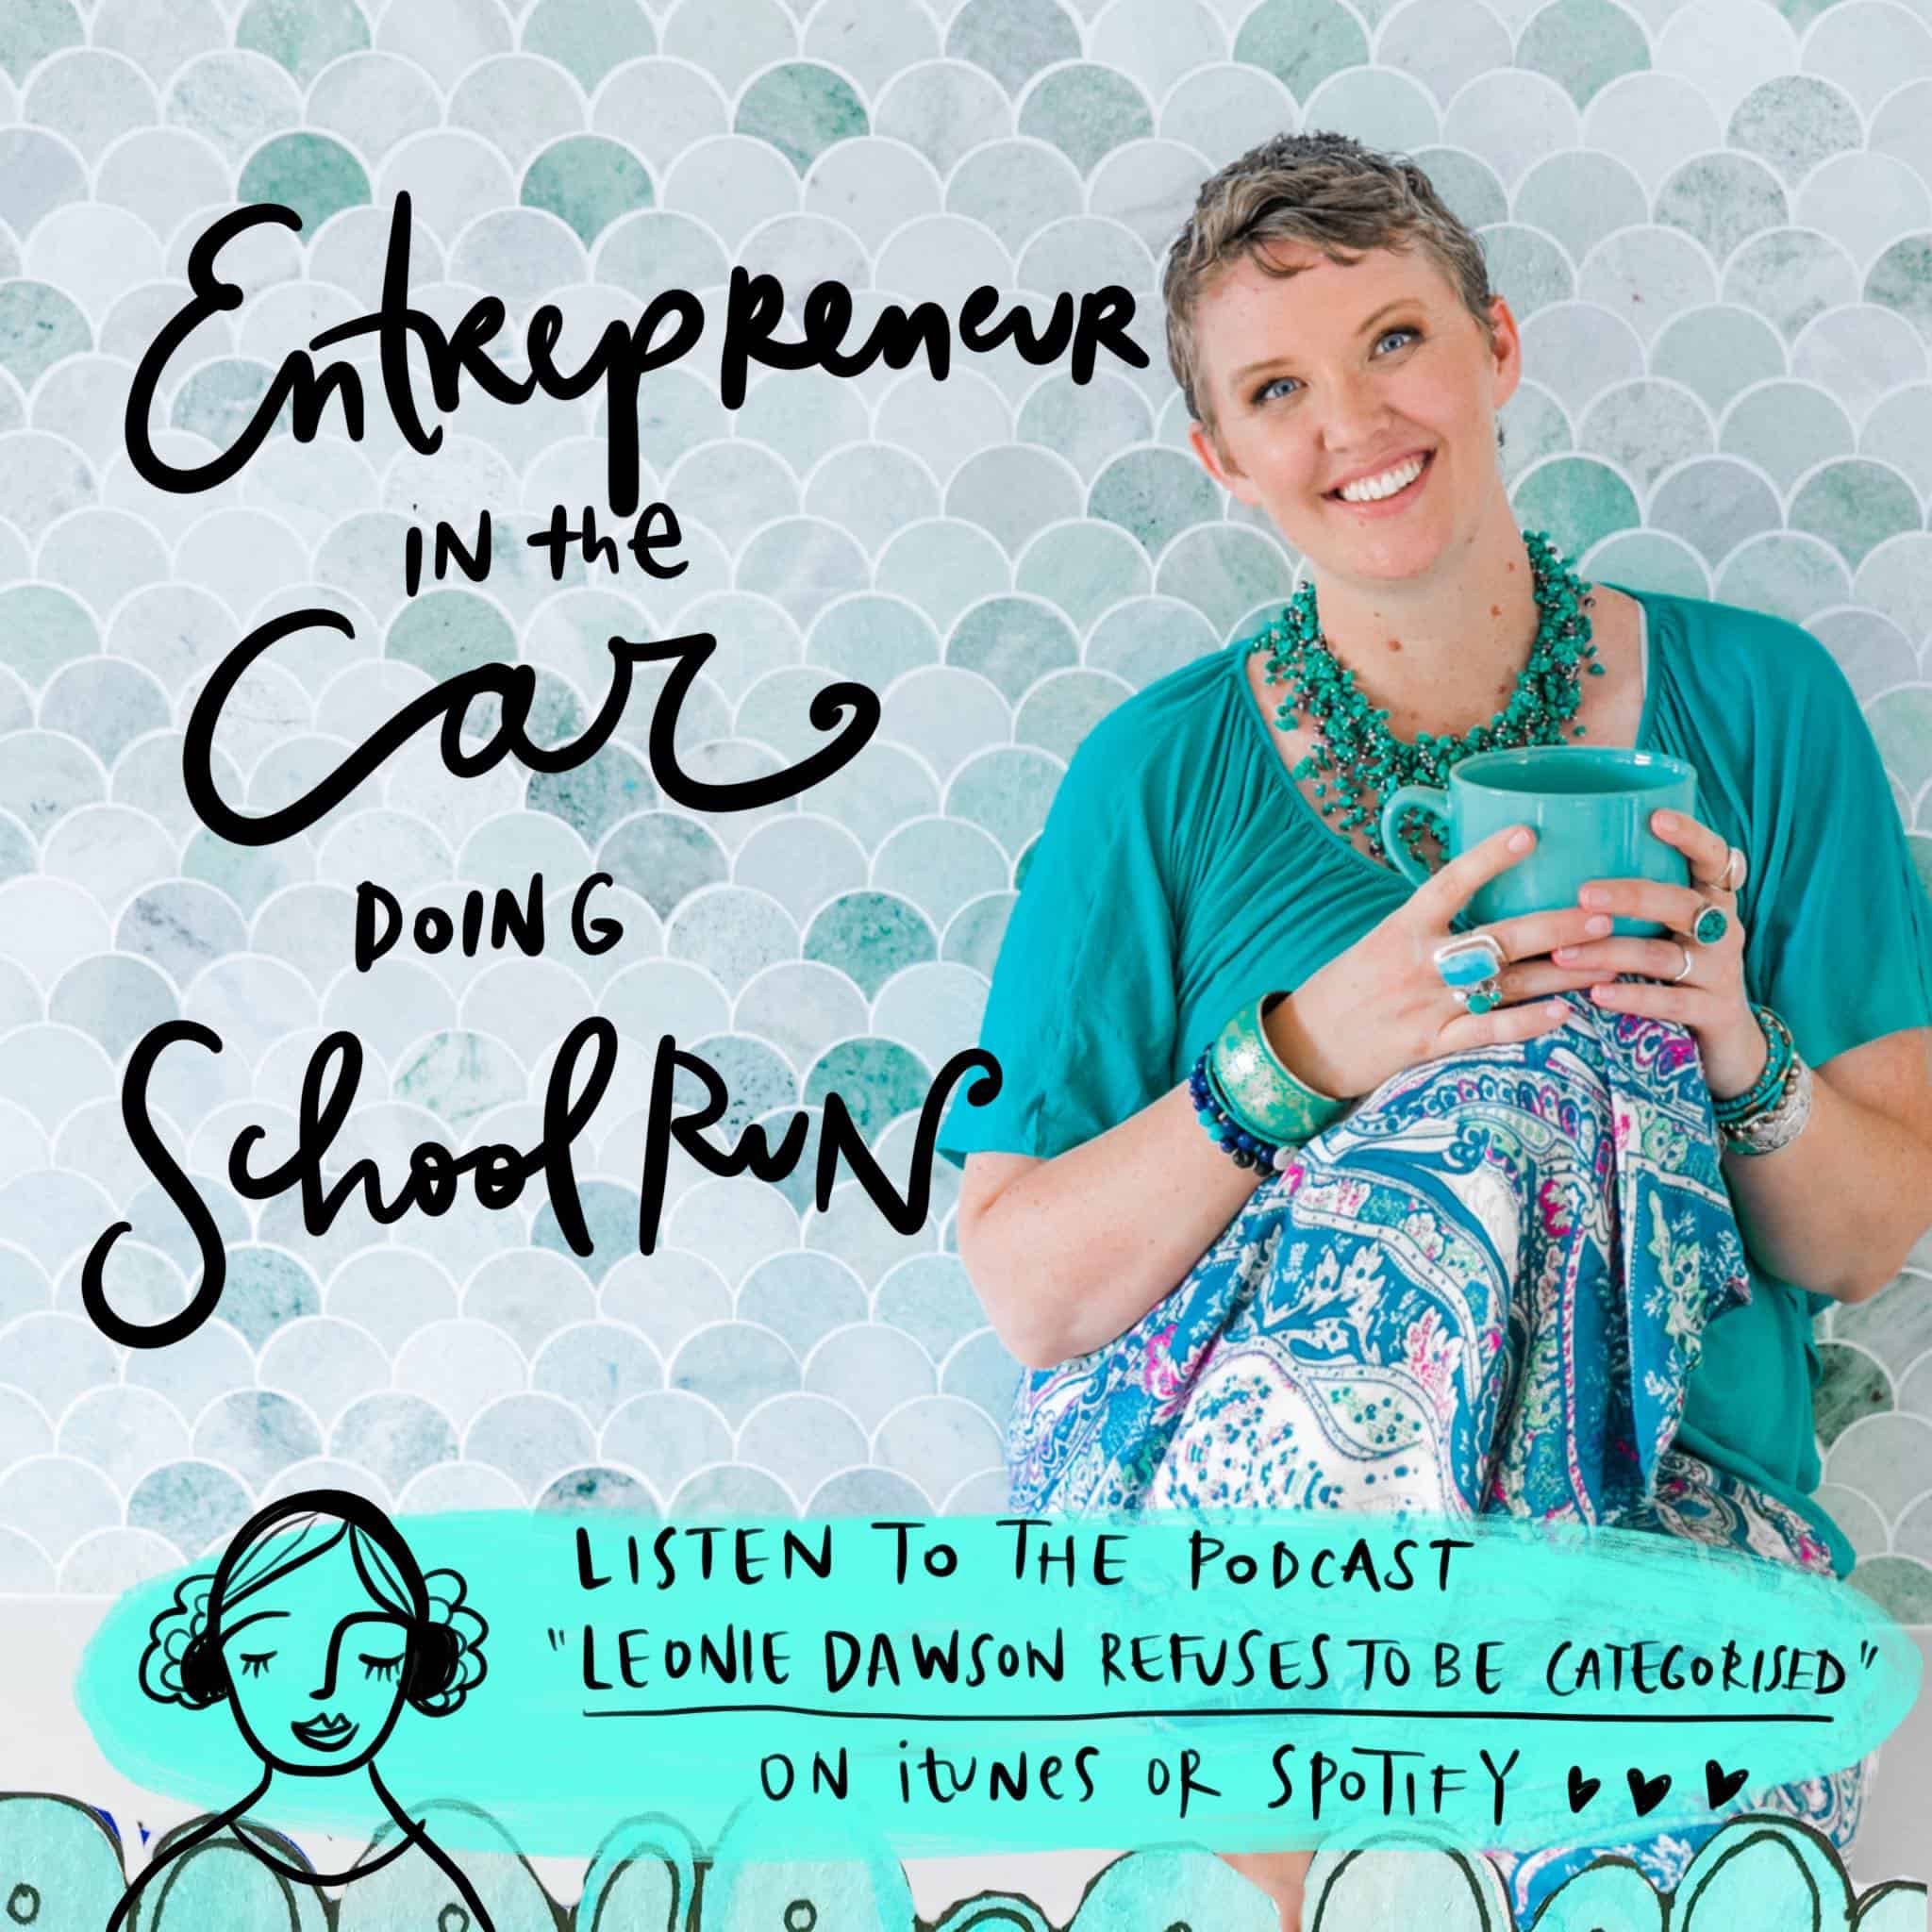 Podcast: Entrepreneur in the Car doing School Run